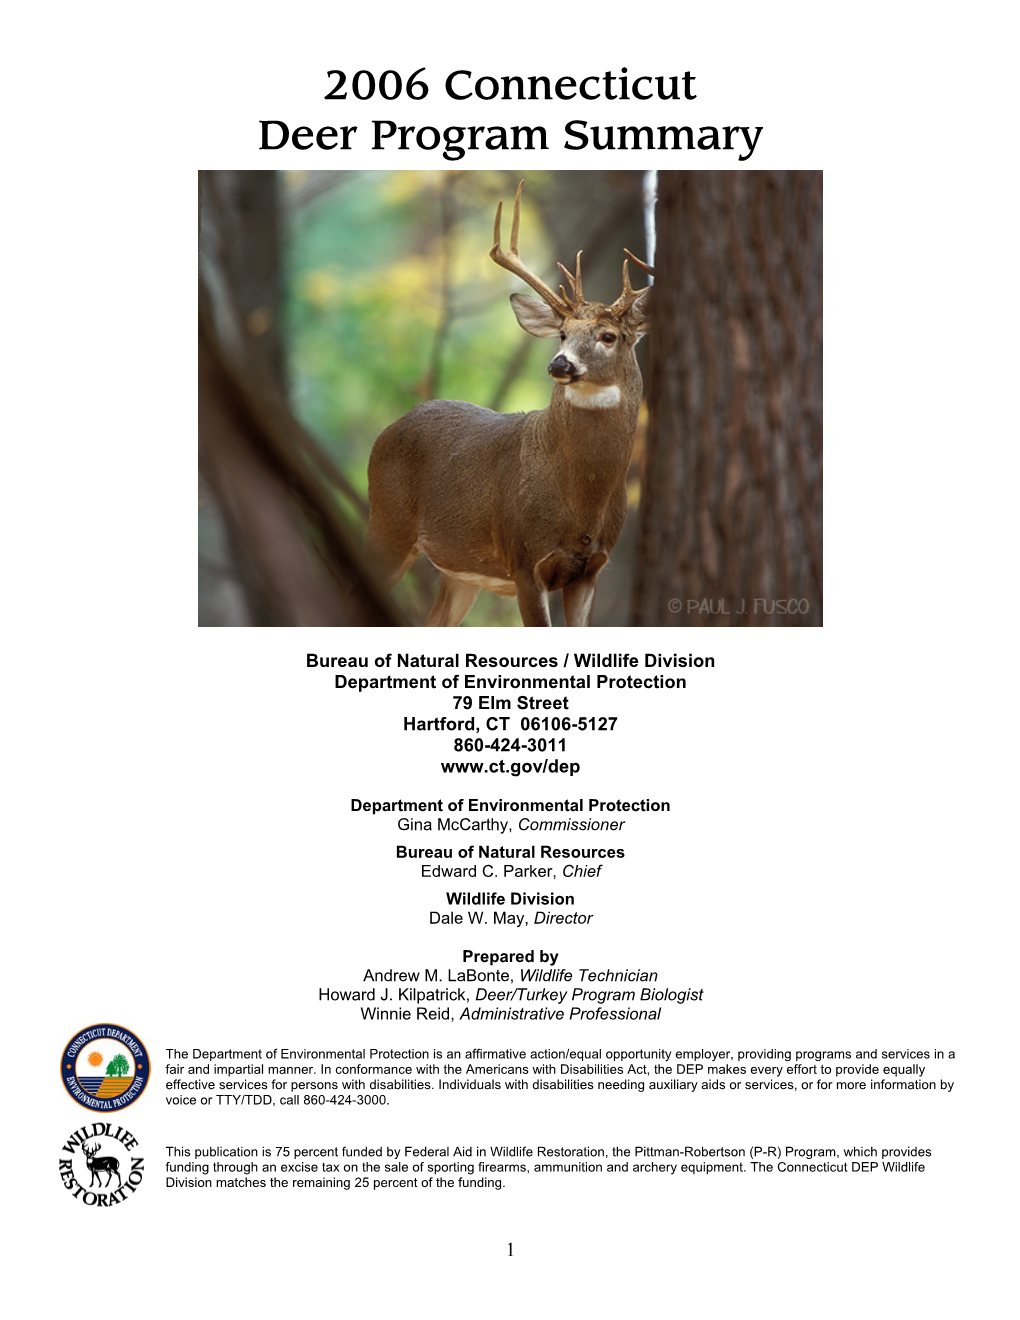 2006 Connecticut Deer Program Summary